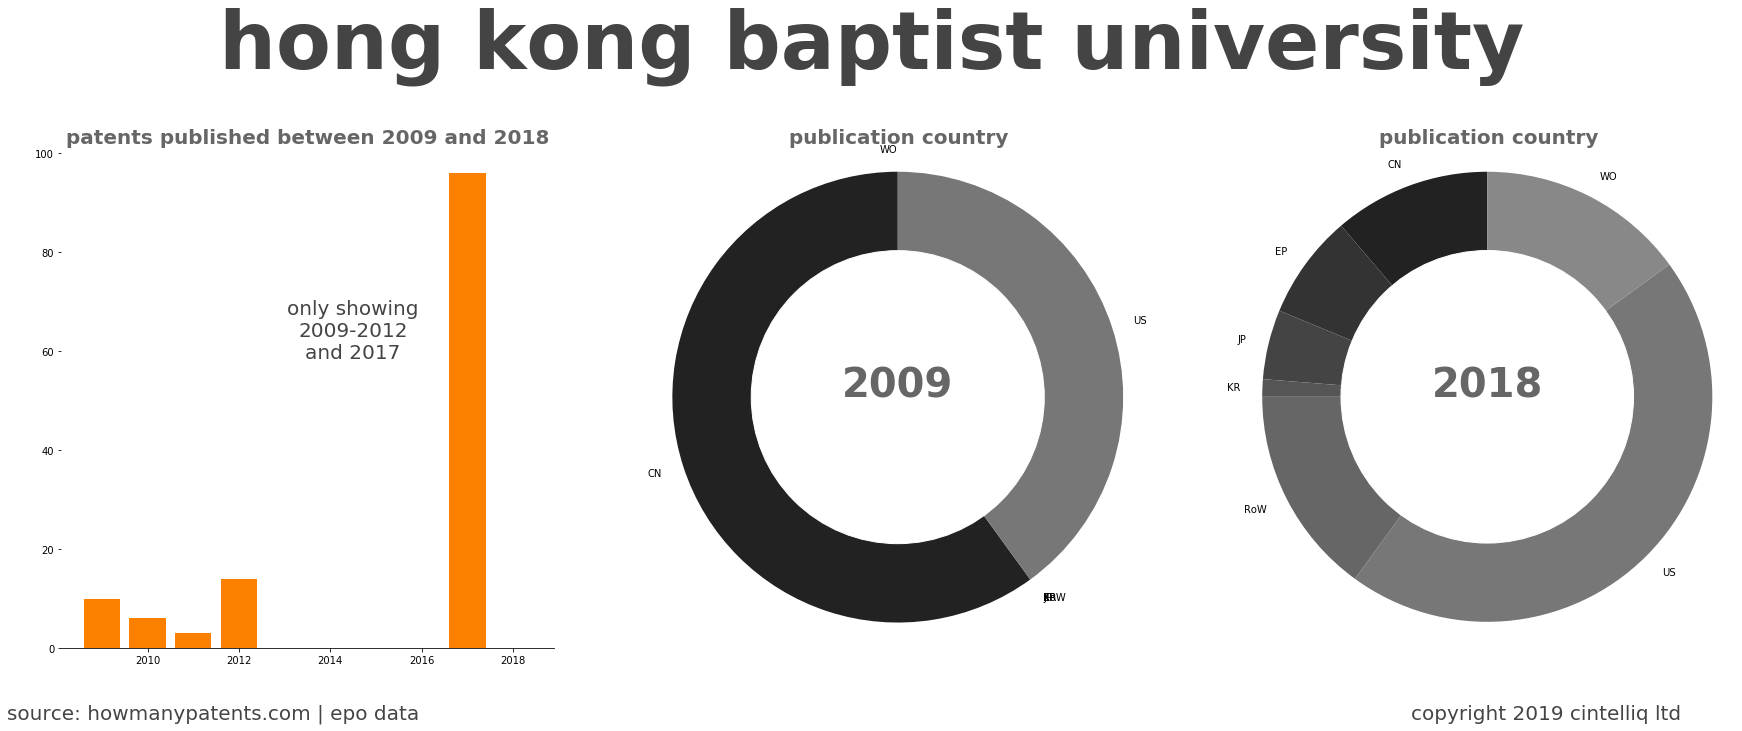 summary of patents for Hong Kong Baptist University